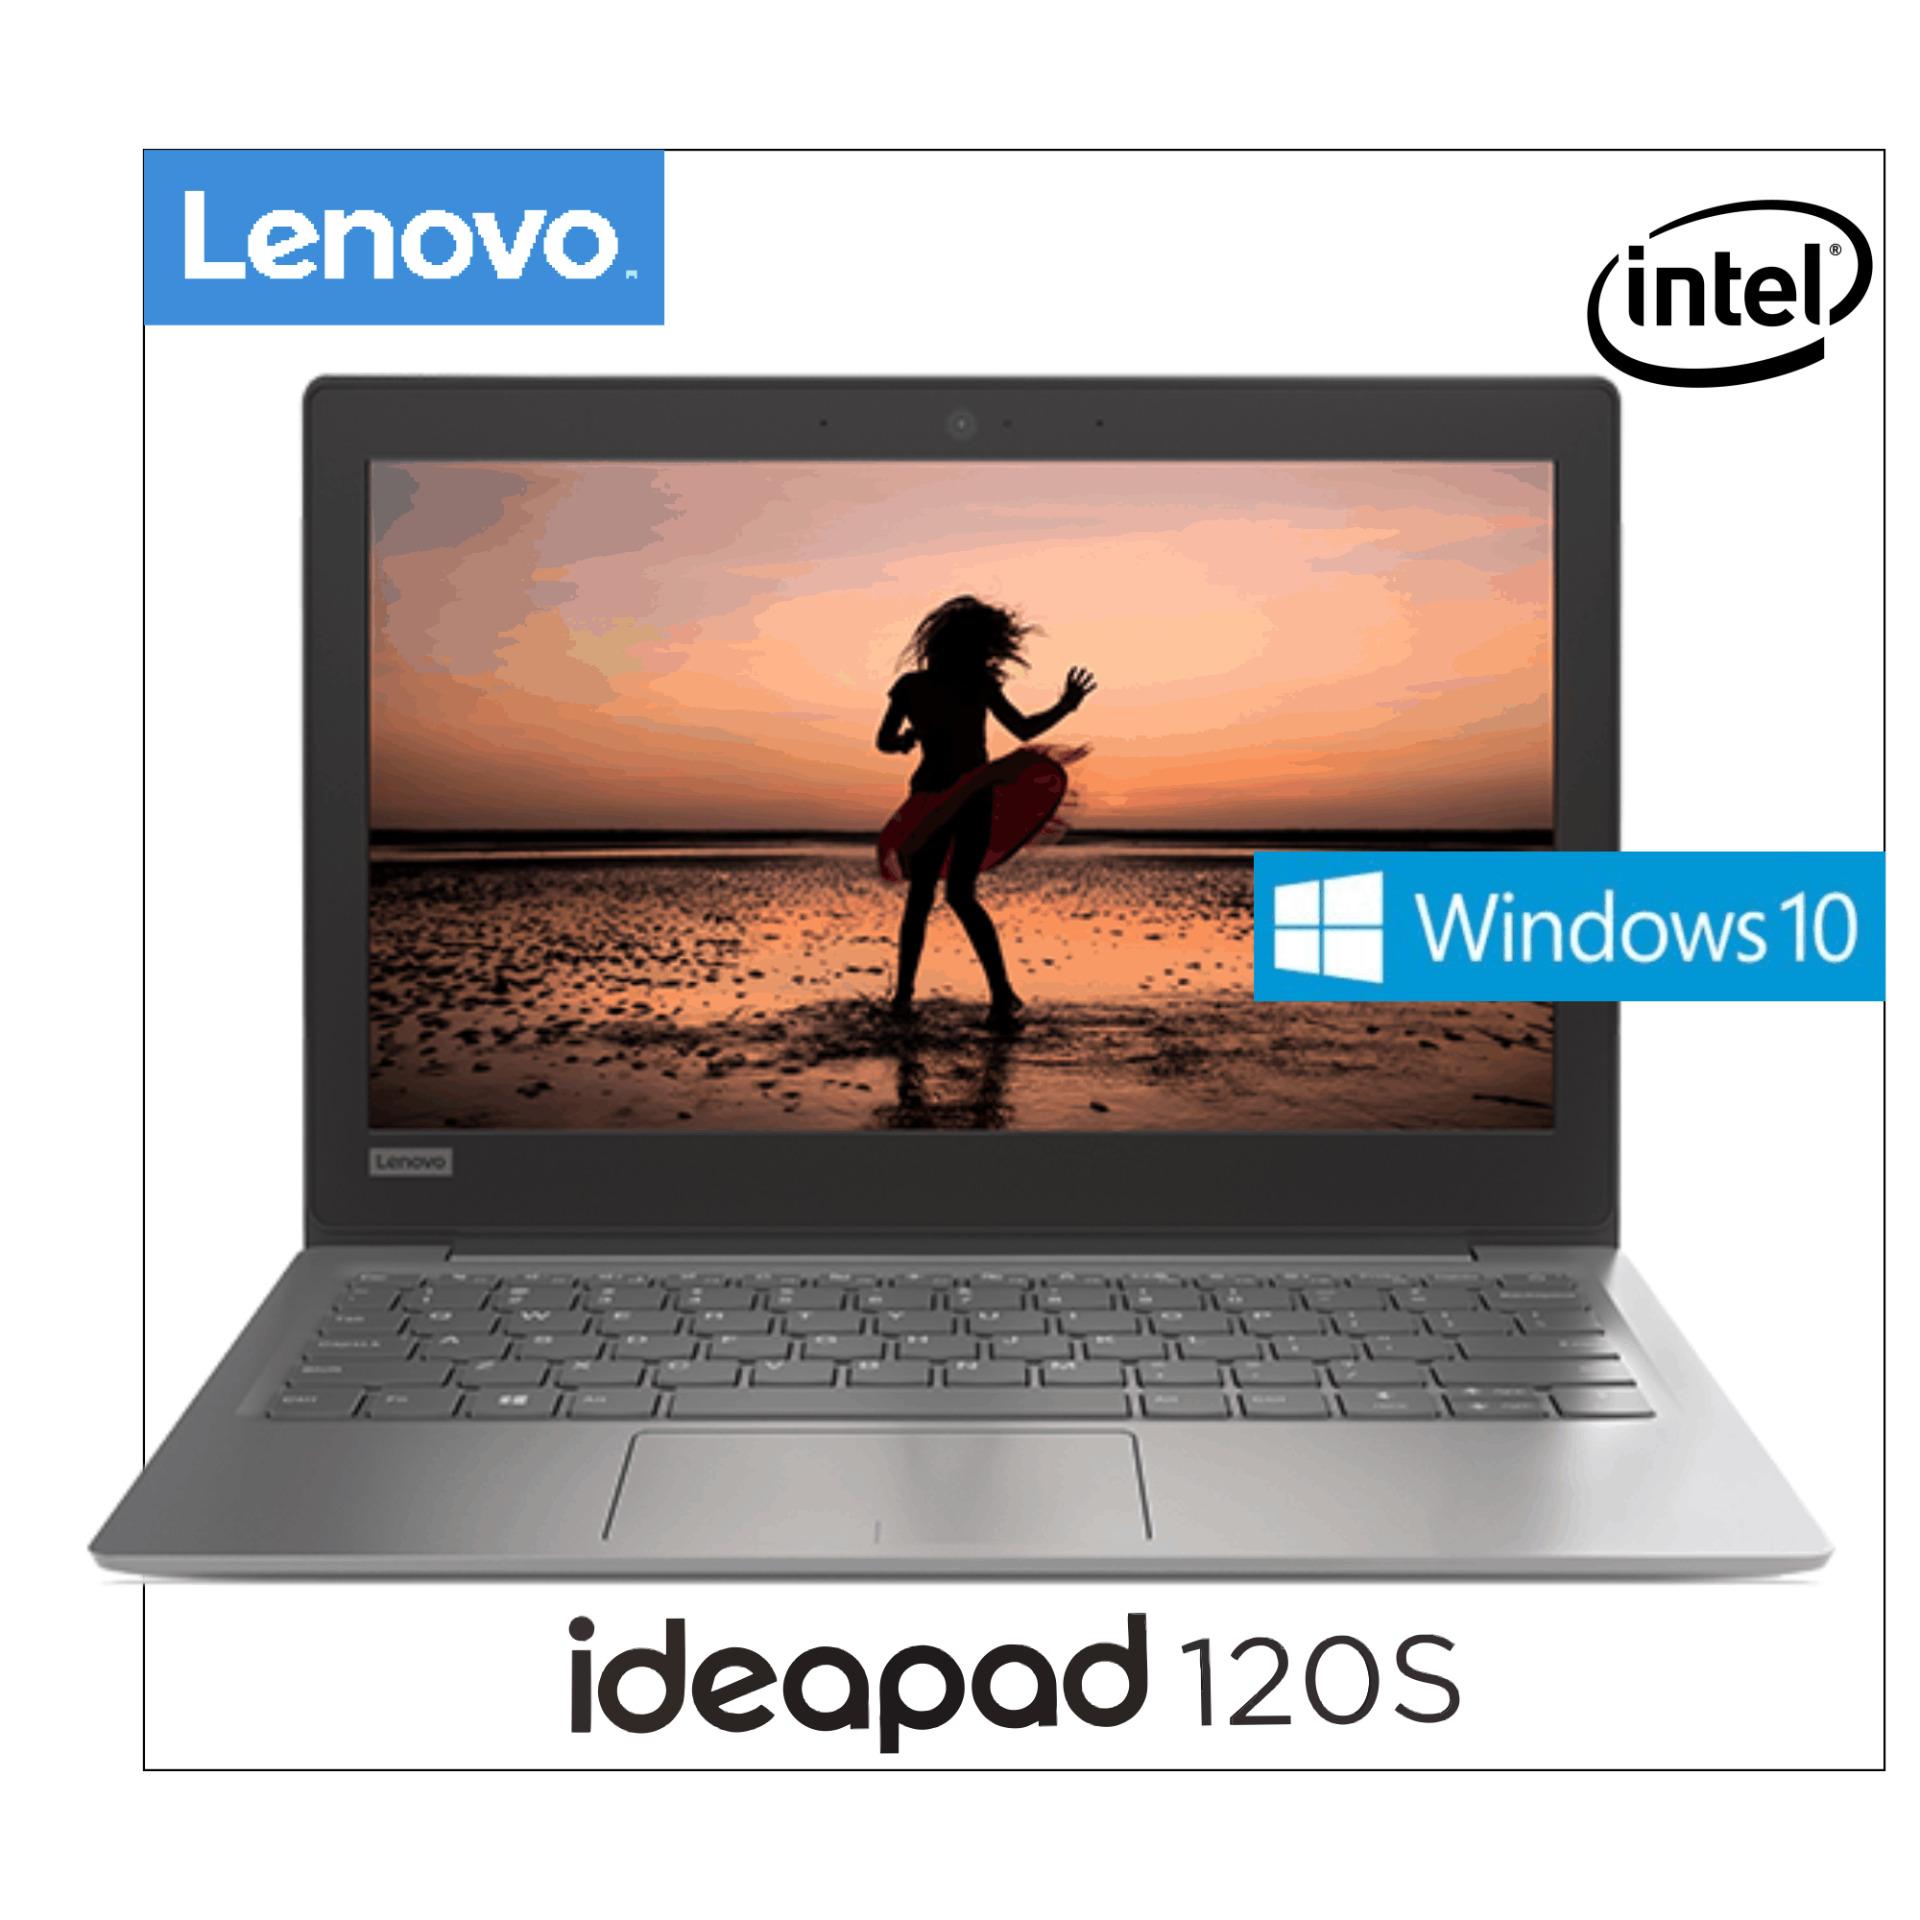 Lenovo IdeaPad 120s-11IAP Intel N3350 / WINDOWS 10 / RAM 2GB / HDD 500GB / Intel HD Graphics